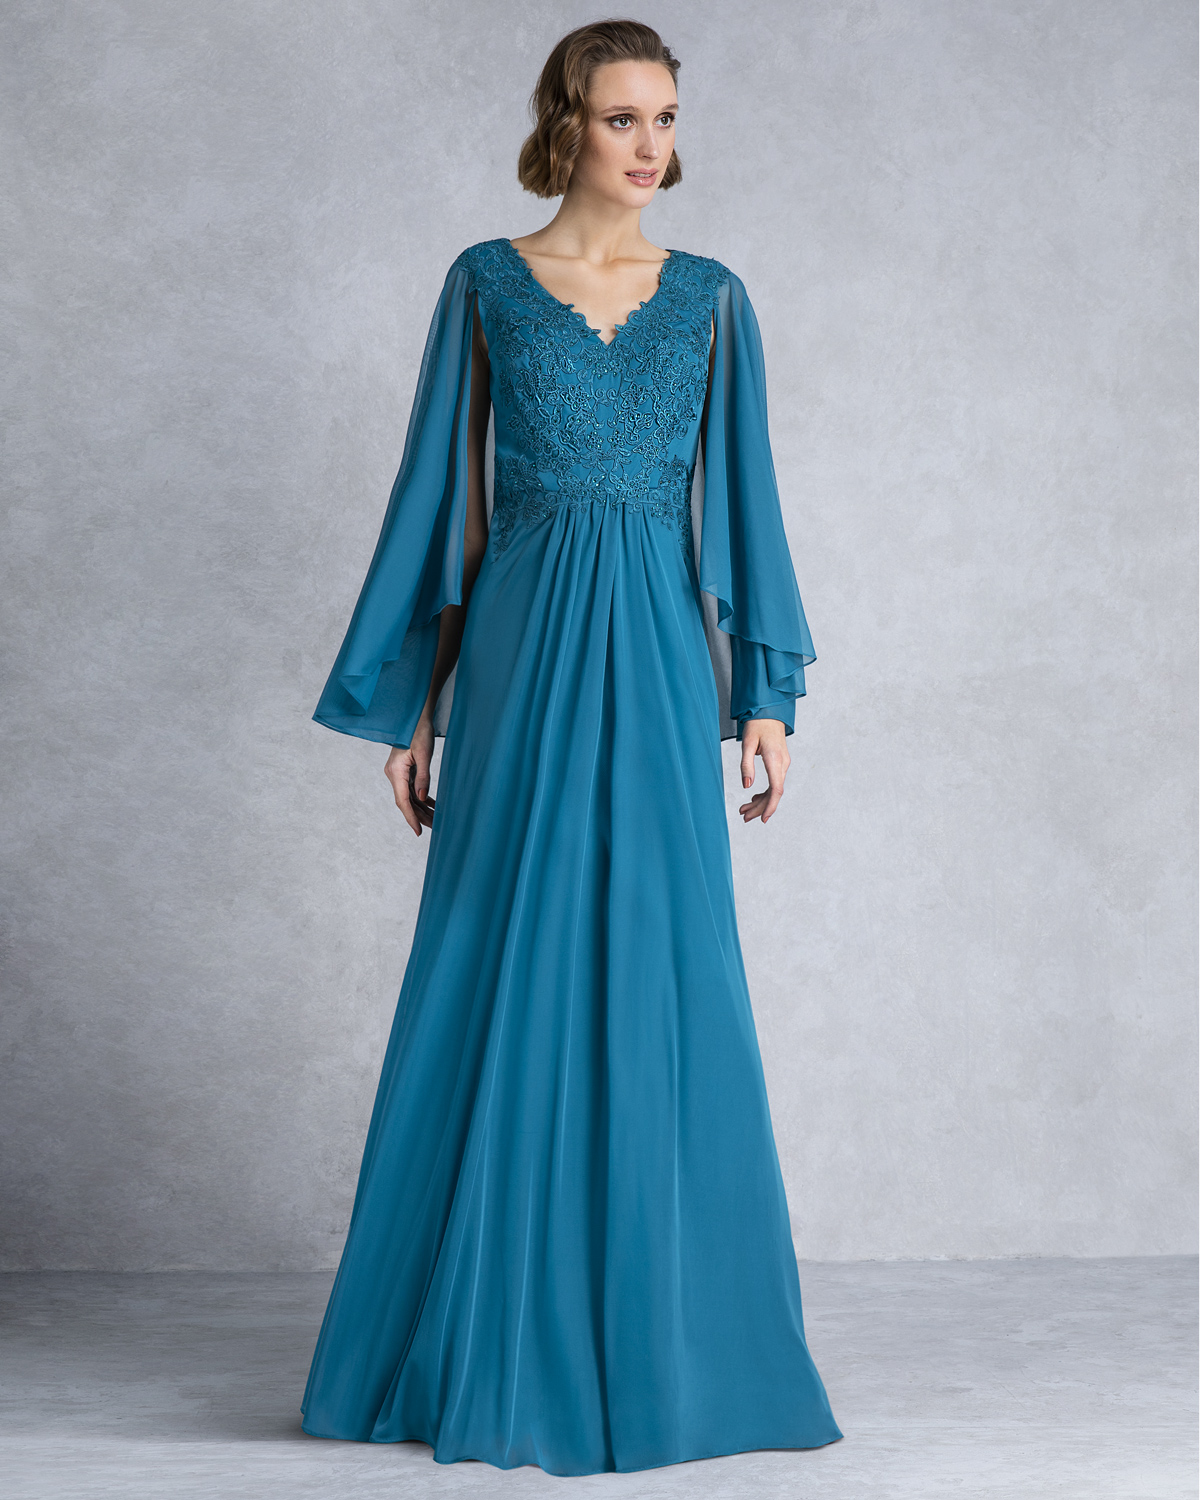 Классические платья / Long evening dress with lace top and chifon sleeves